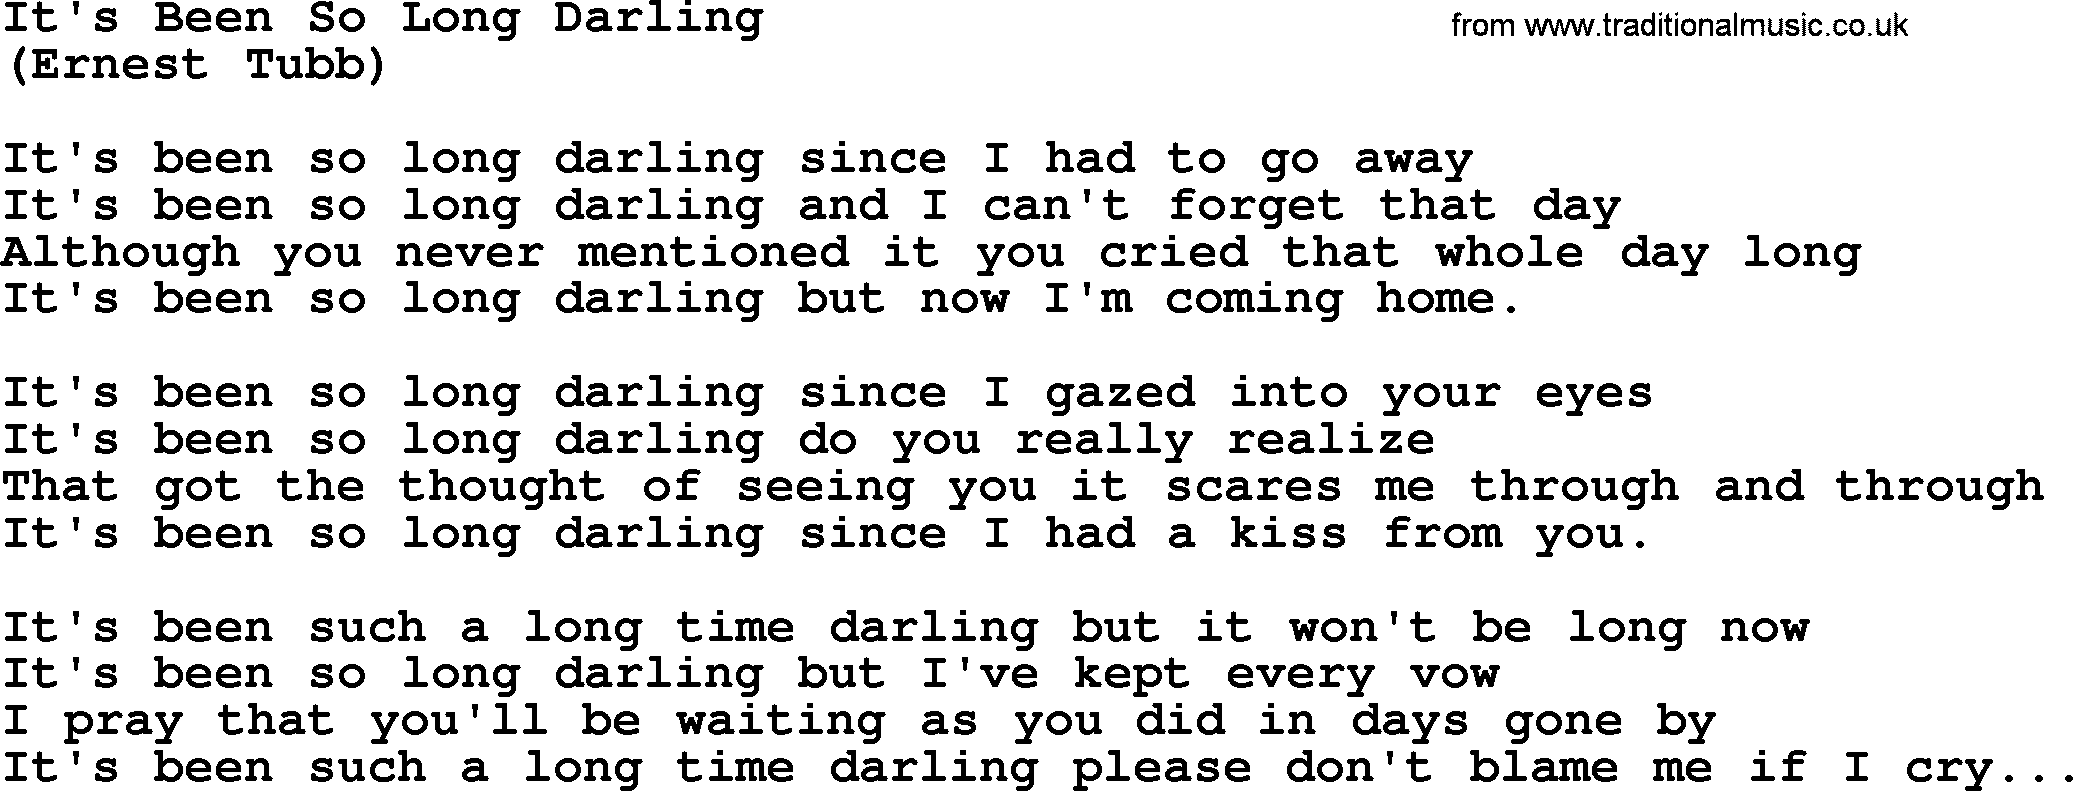 George Jones song: It's Been So Long Darling, lyrics